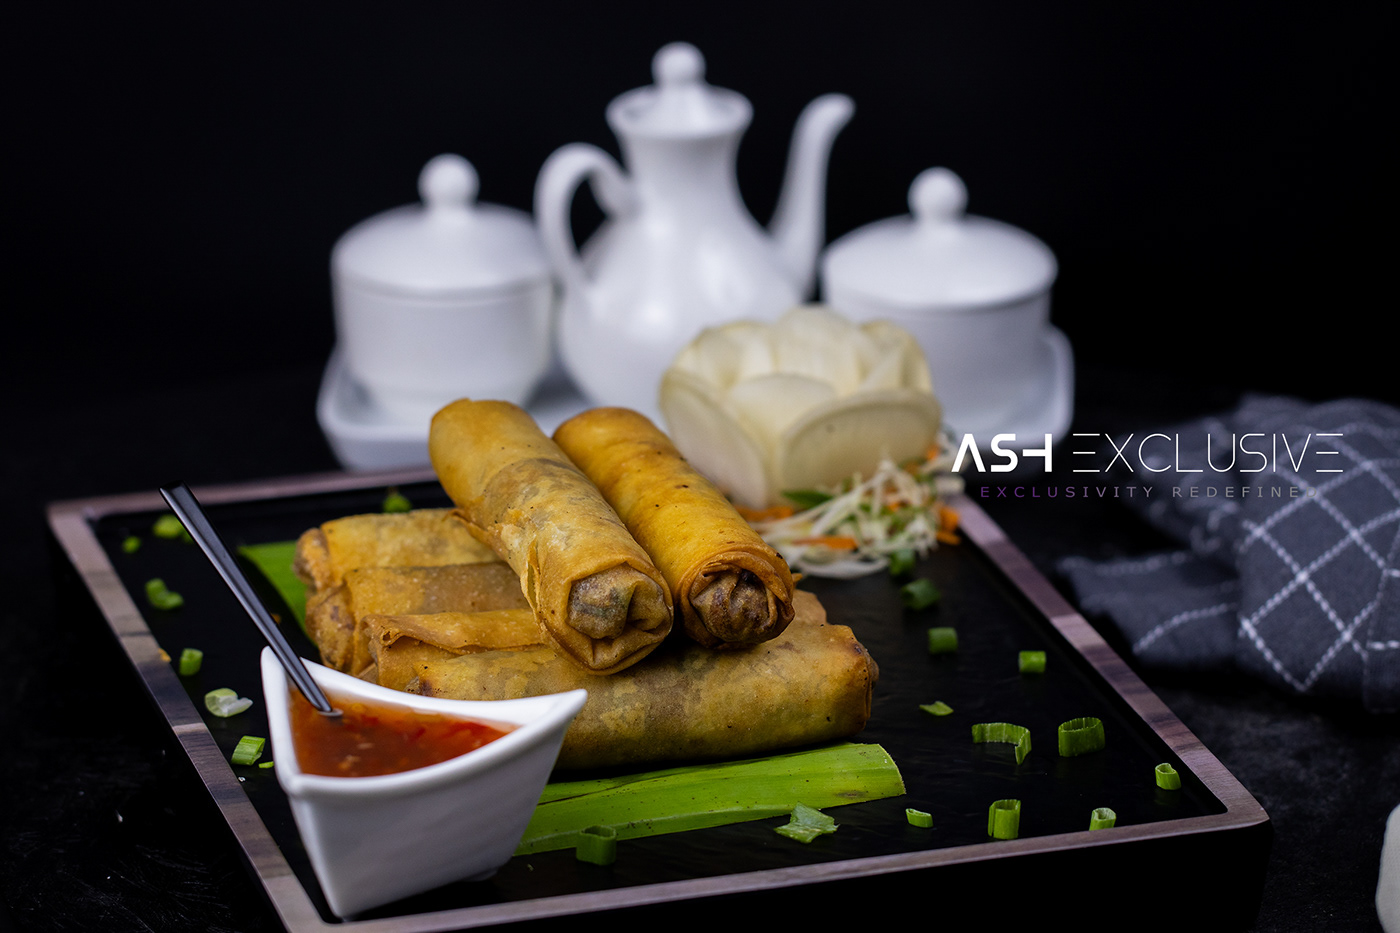 Chinese Food foodphotography mandarin cuisine restaurant chinese restaurant food menu food styling dubai food photographer dark food photography